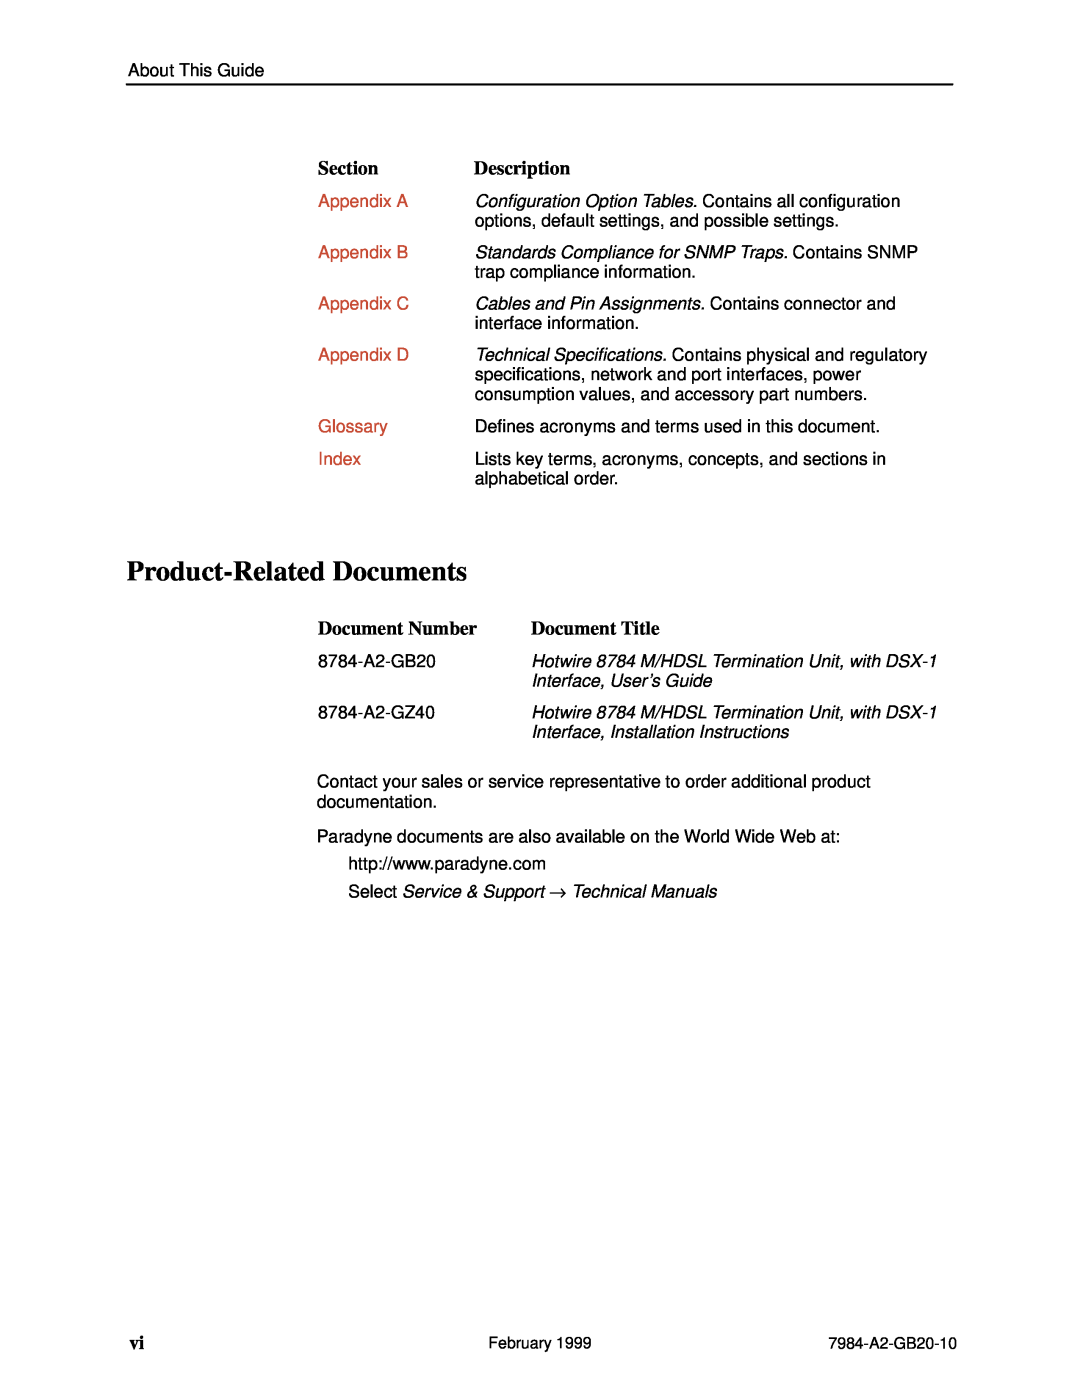 Paradyne Hotwire 7984 manual Product-Related Documents, Document Number, Document Title, Appendix A, Appendix B, Appendix C 